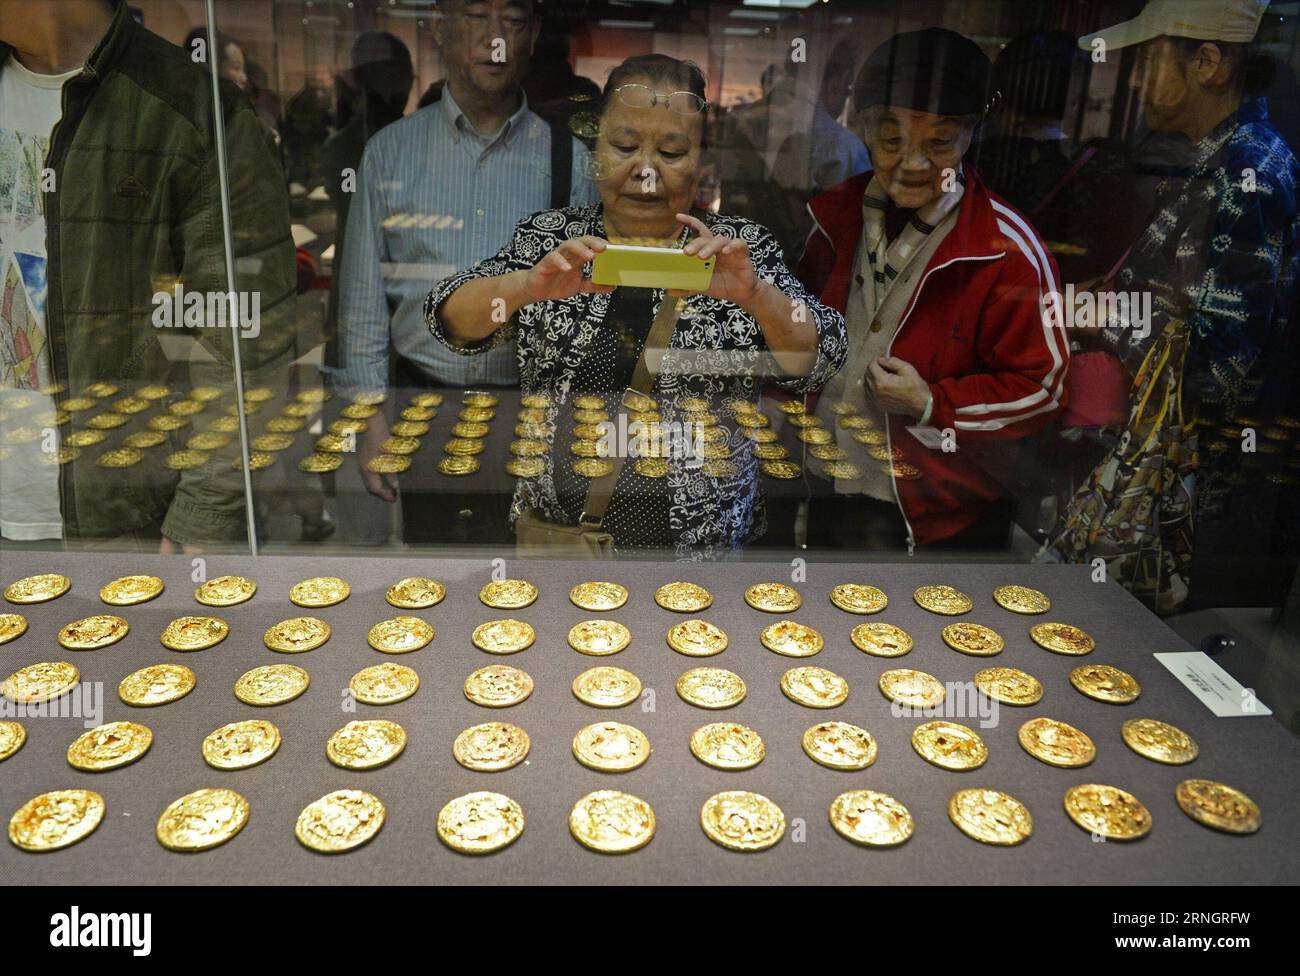 Han-Dynastie-Ausstellung a Nanchang, Cina (161011) -- NANCHANG, 11 ottobre 2016 -- i visitatori vedono le torte d'oro in una mostra nel Museo provinciale di Jiangxi a Nanchang, capitale della provincia di Jiangxi della Cina orientale, 11 ottobre 2016. La mostra mostrava 922 reliquie culturali rinvenute dalla tomba di 2.000 anni del marchese di Haihun, che ebbe un breve regno di 27 giorni come imperatore della dinastia Han occidentale (206 a.C. - 24 d.C.). (Yxb) CHINA-NANCHANG-MARQUIS OF HAIHUN-TOMB-CULTURAL RELICS-EXHIBITION(CN) WanxXiang PUBLICATIONxNOTxINxCHN Han Dynasty Exhibition a Nanchang Cina Nanchang OCT 11 2016 Foto Stock